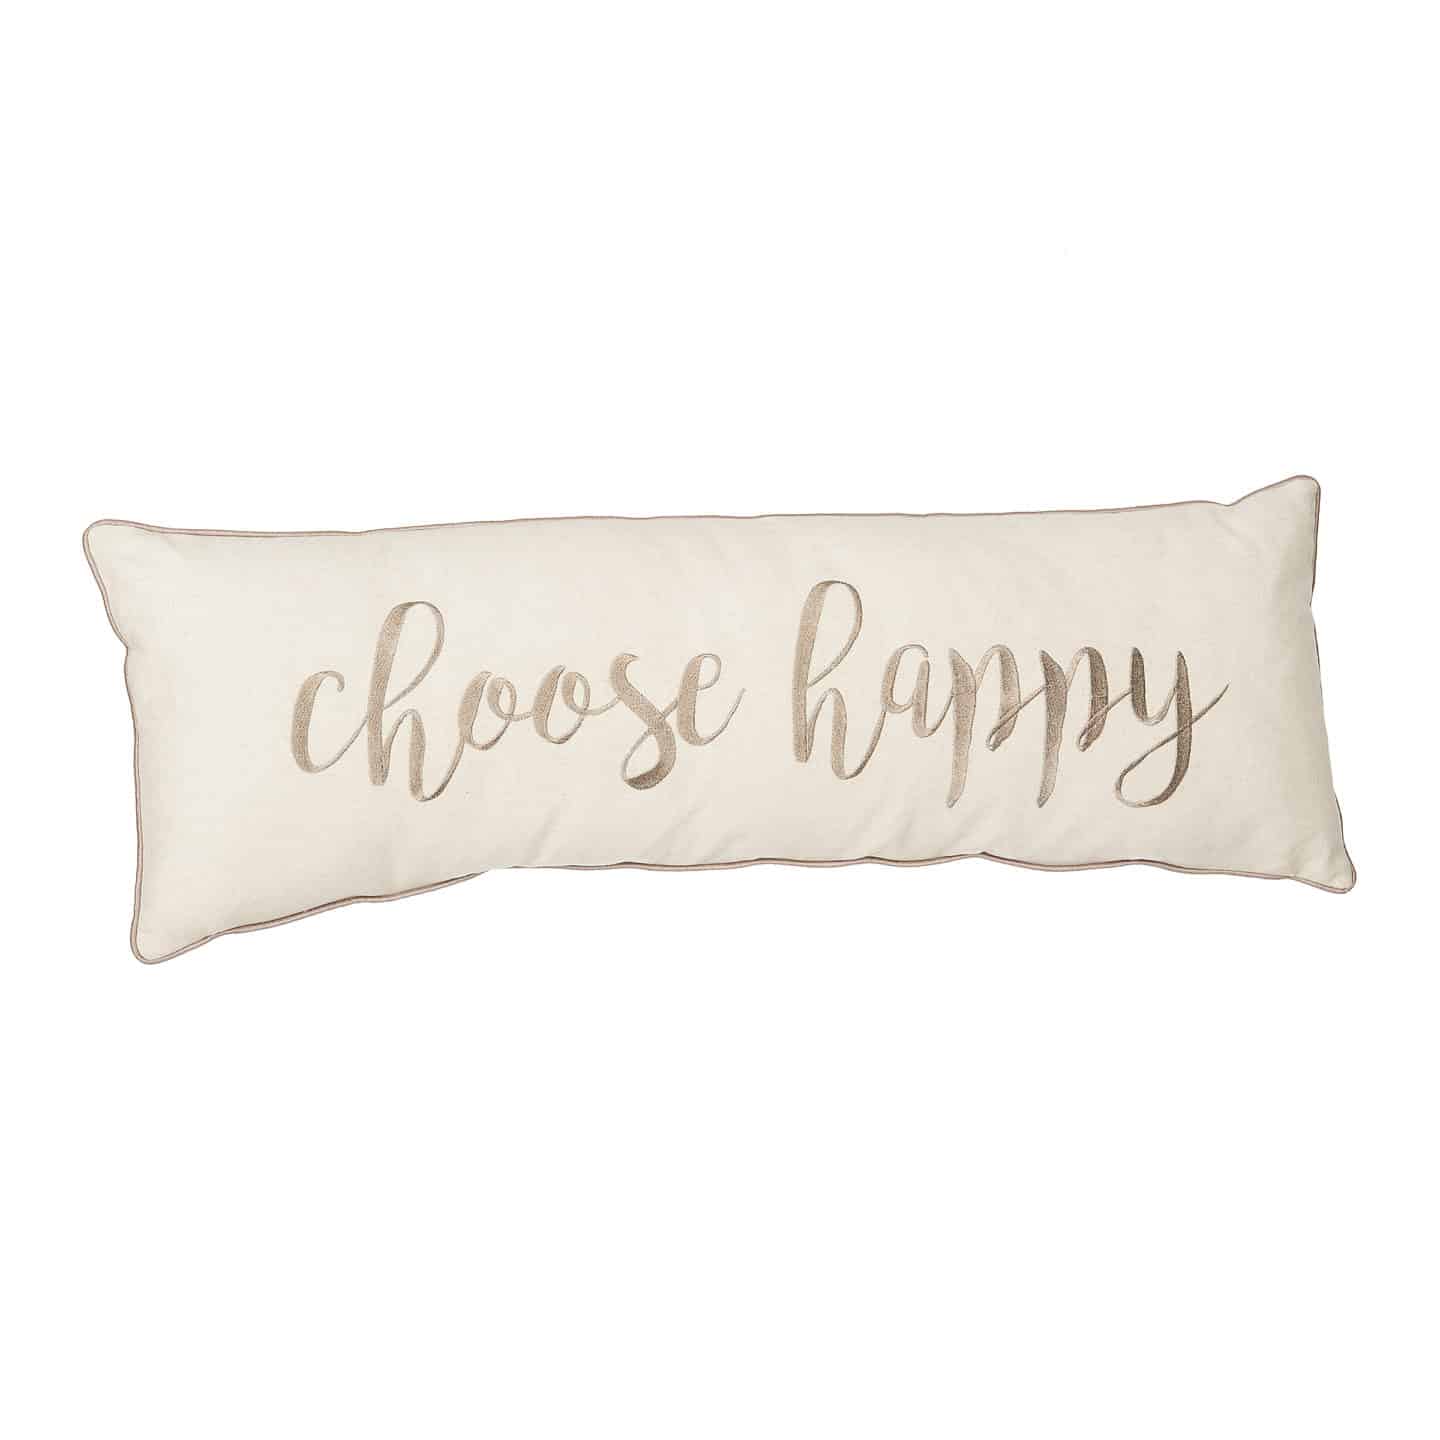 Choose Happy Accent Pillow